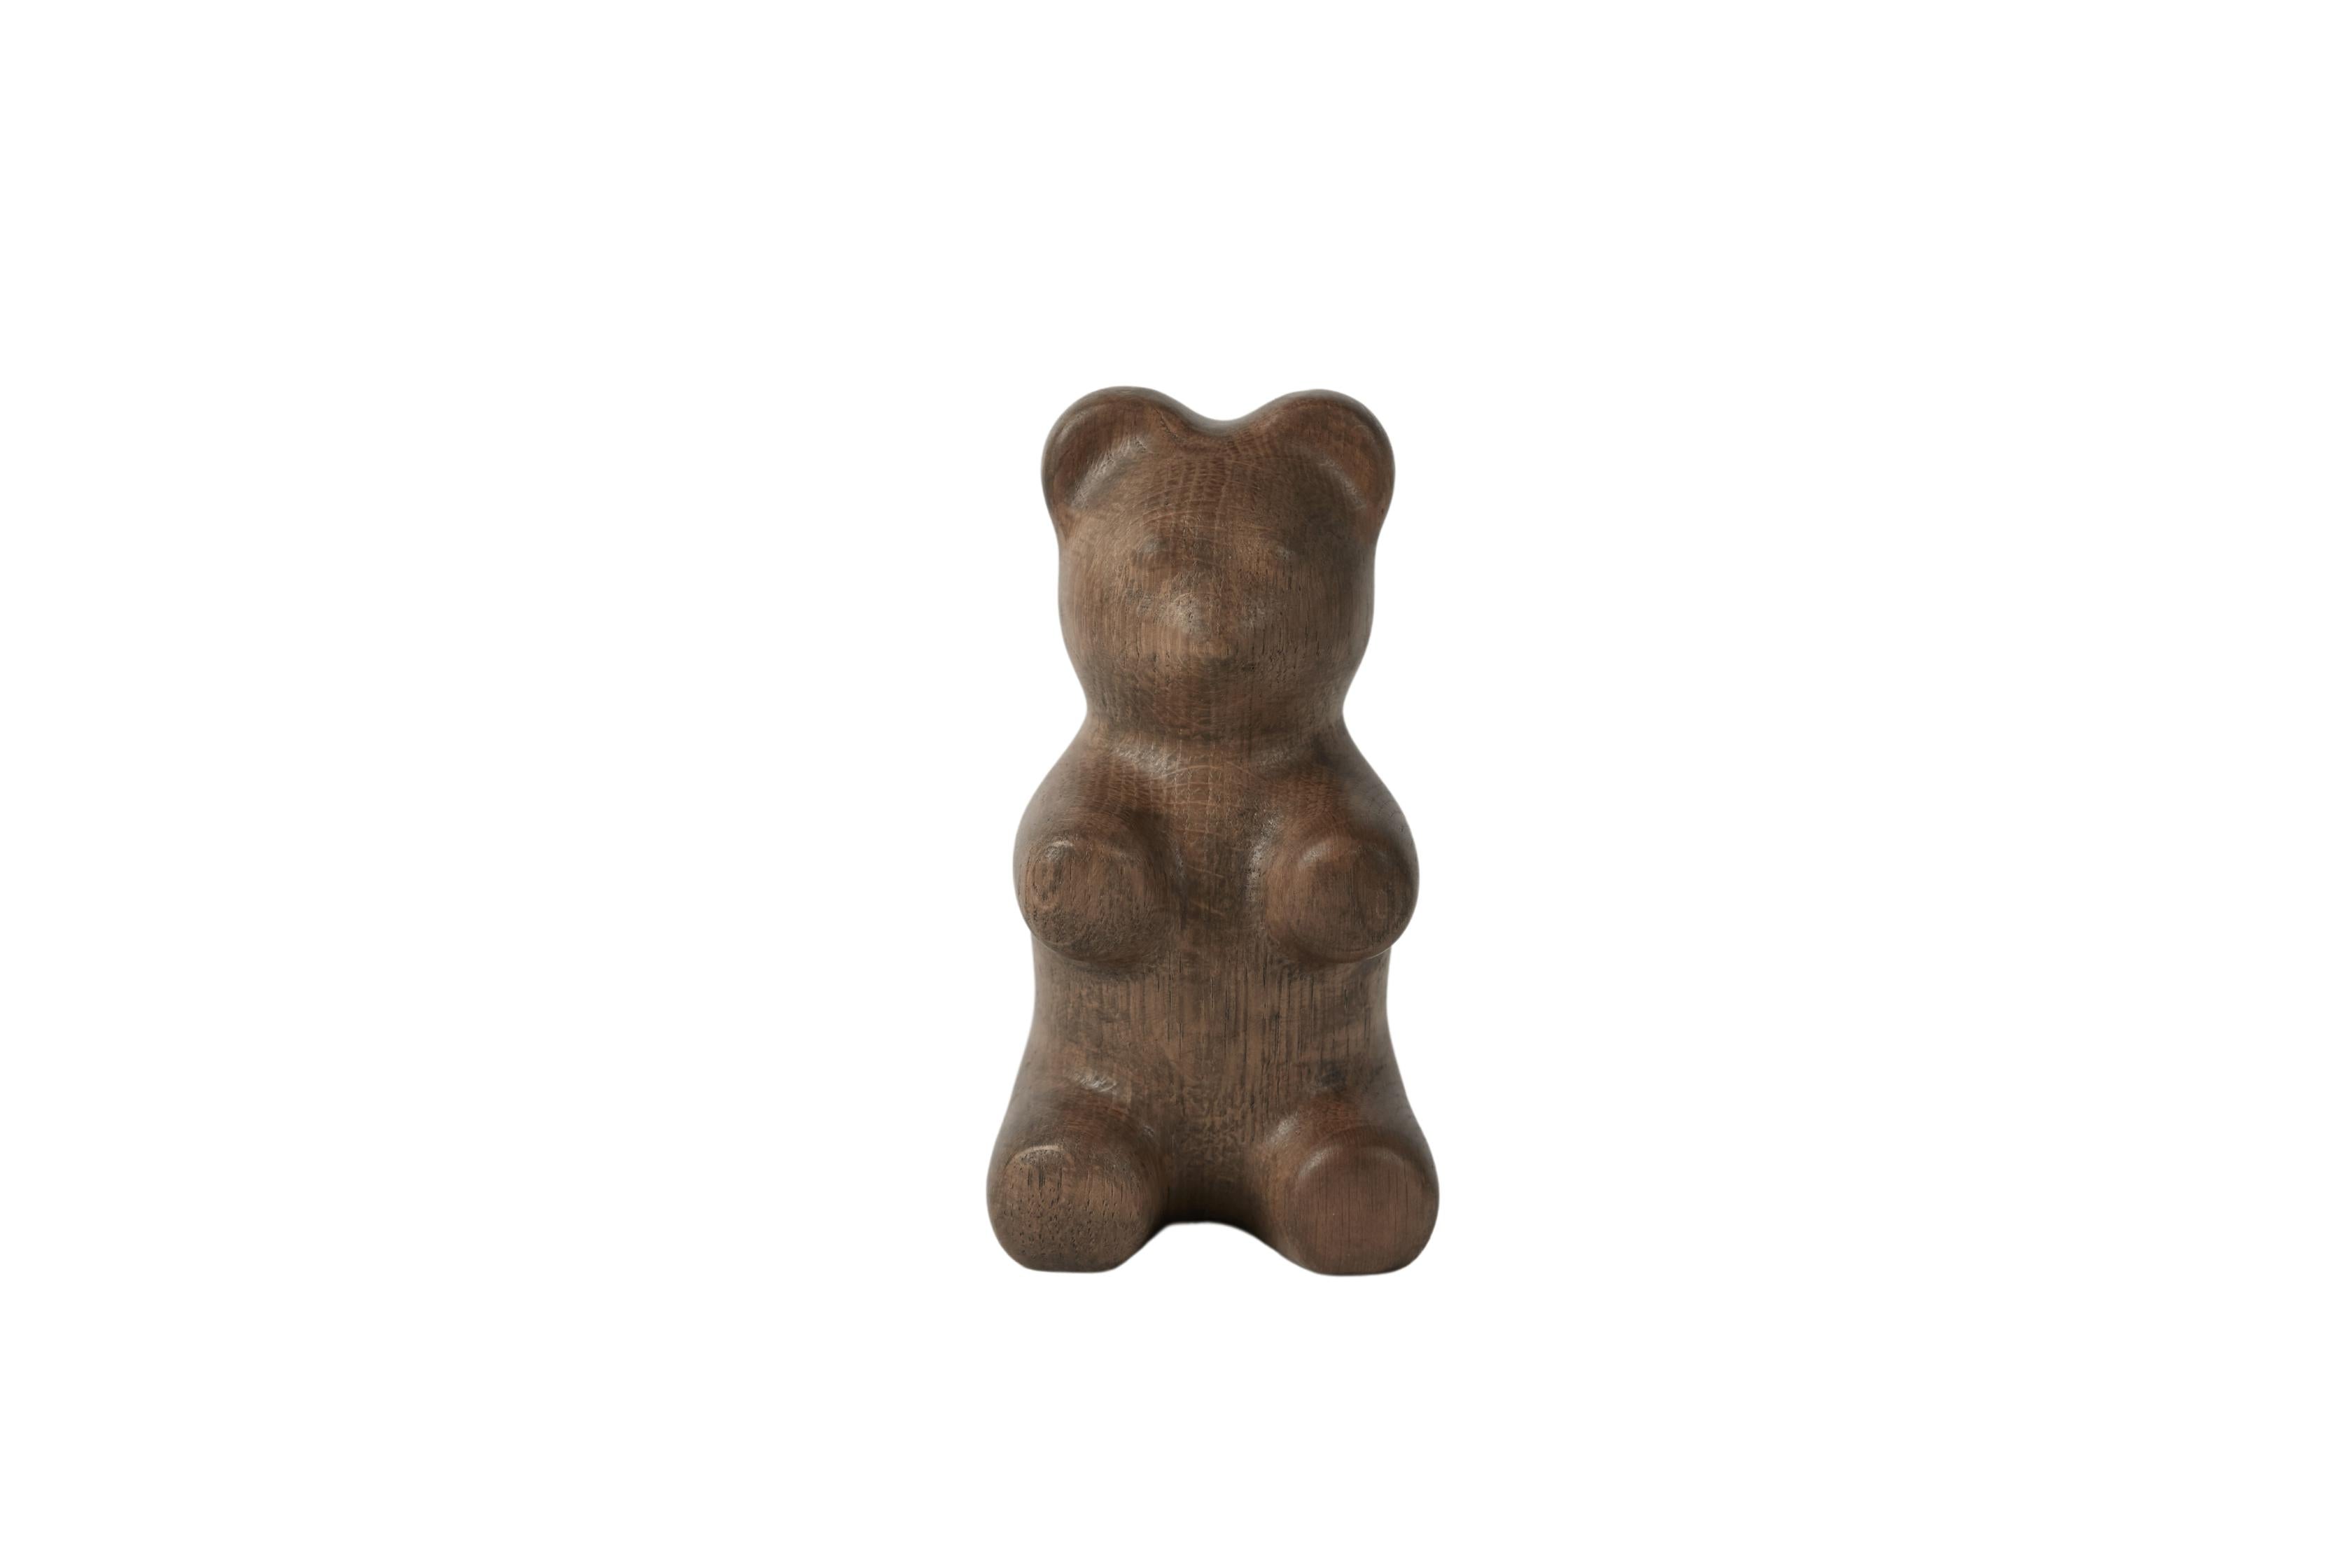 Boyhood Gummy björn dekorativ figur färgad ek, liten